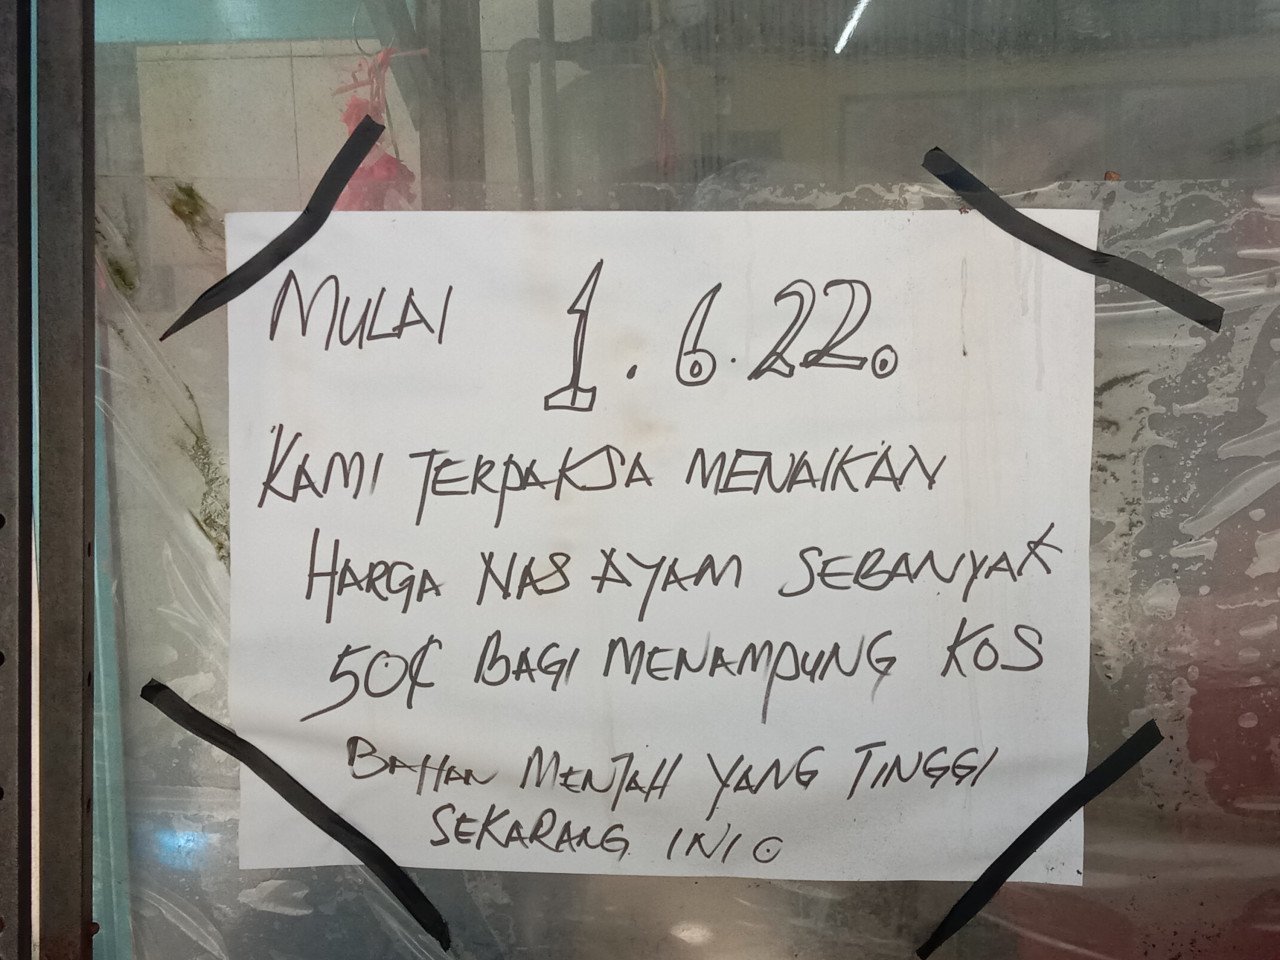 Notis ditampal disebuah gerai makan memberitahu pelanggan tentang kenaikkan harga nasi ayam. - Gambar oleh Qistina Nadia